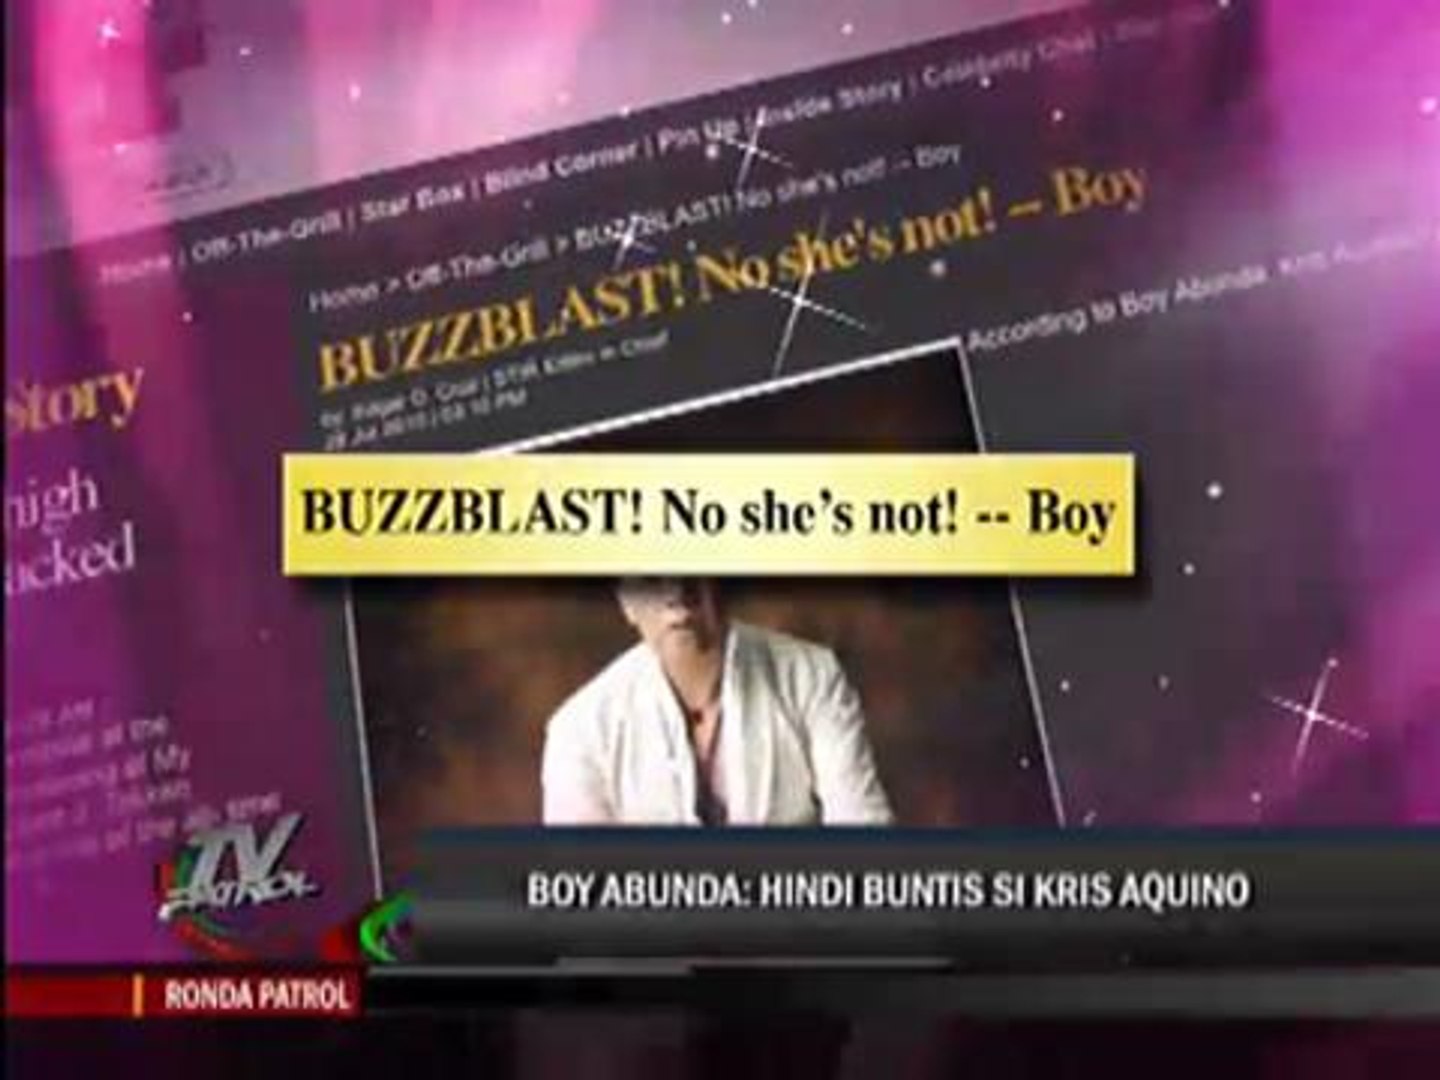 Kris Aquino is not pregnant - Boy Abunda